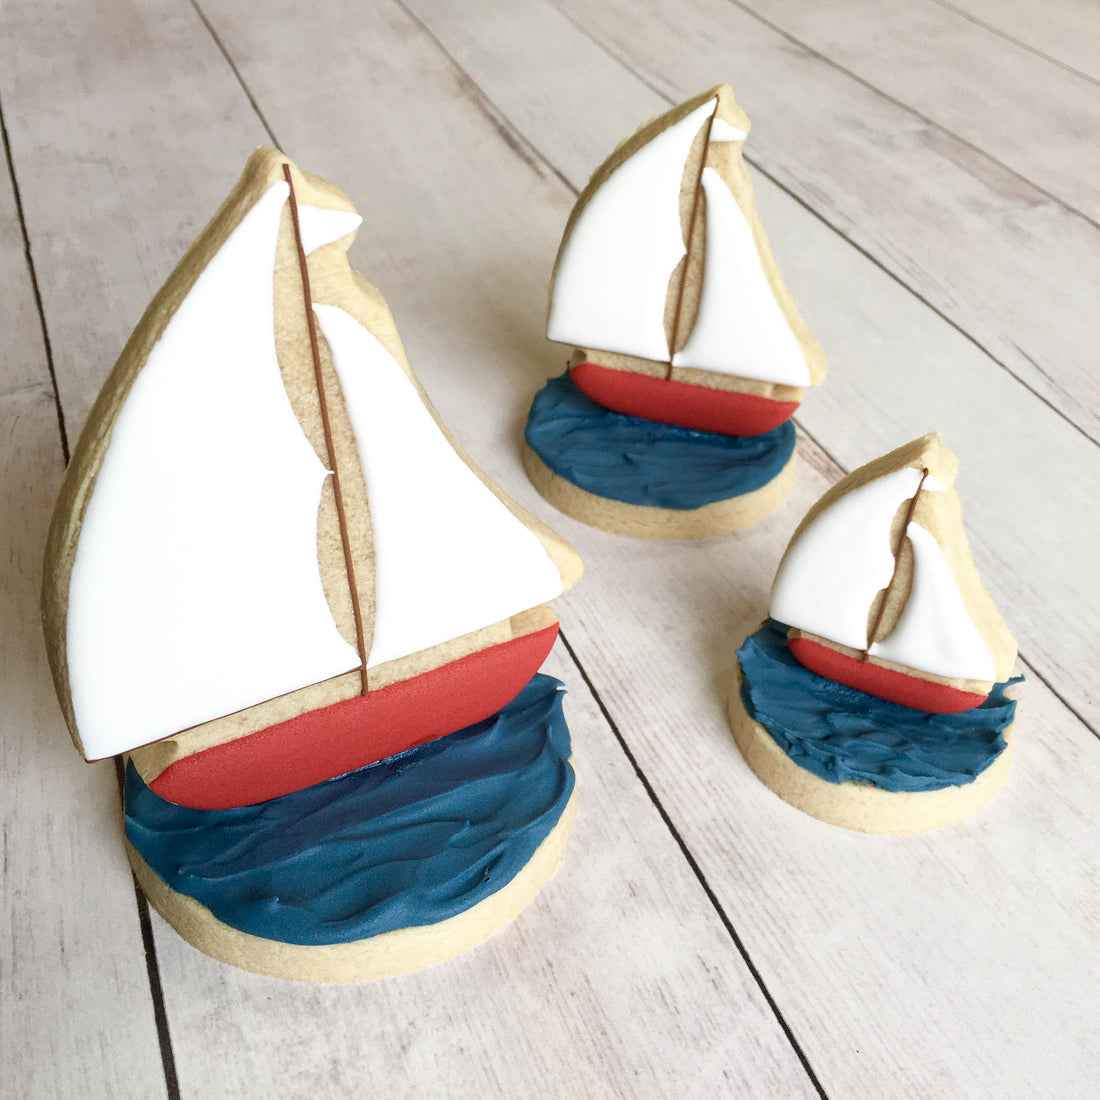 3D Sailboat Cookie Tutorial